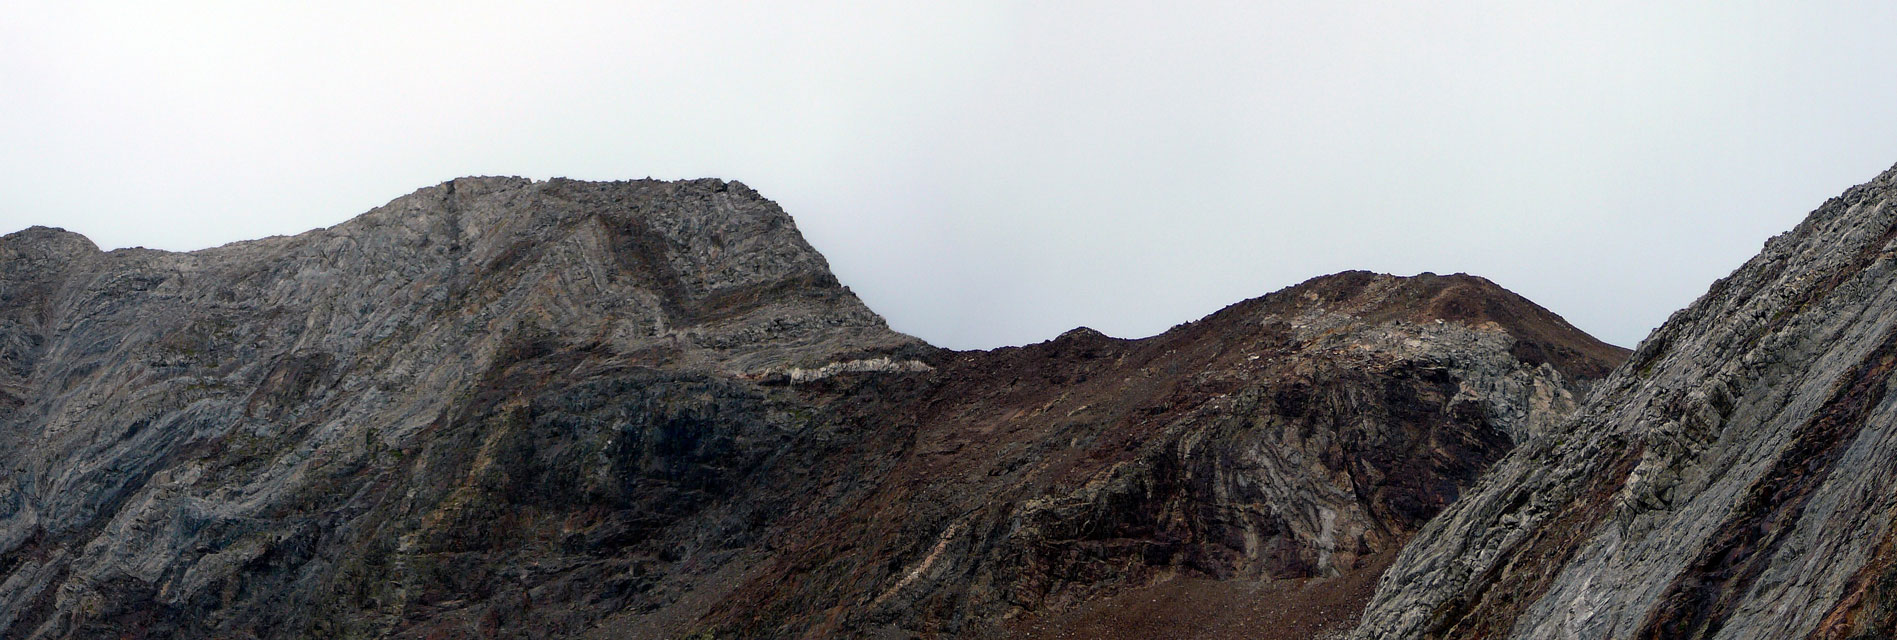 Tuqueta Roya (3273 m) - Tuca de Llardaneta (3311 m)